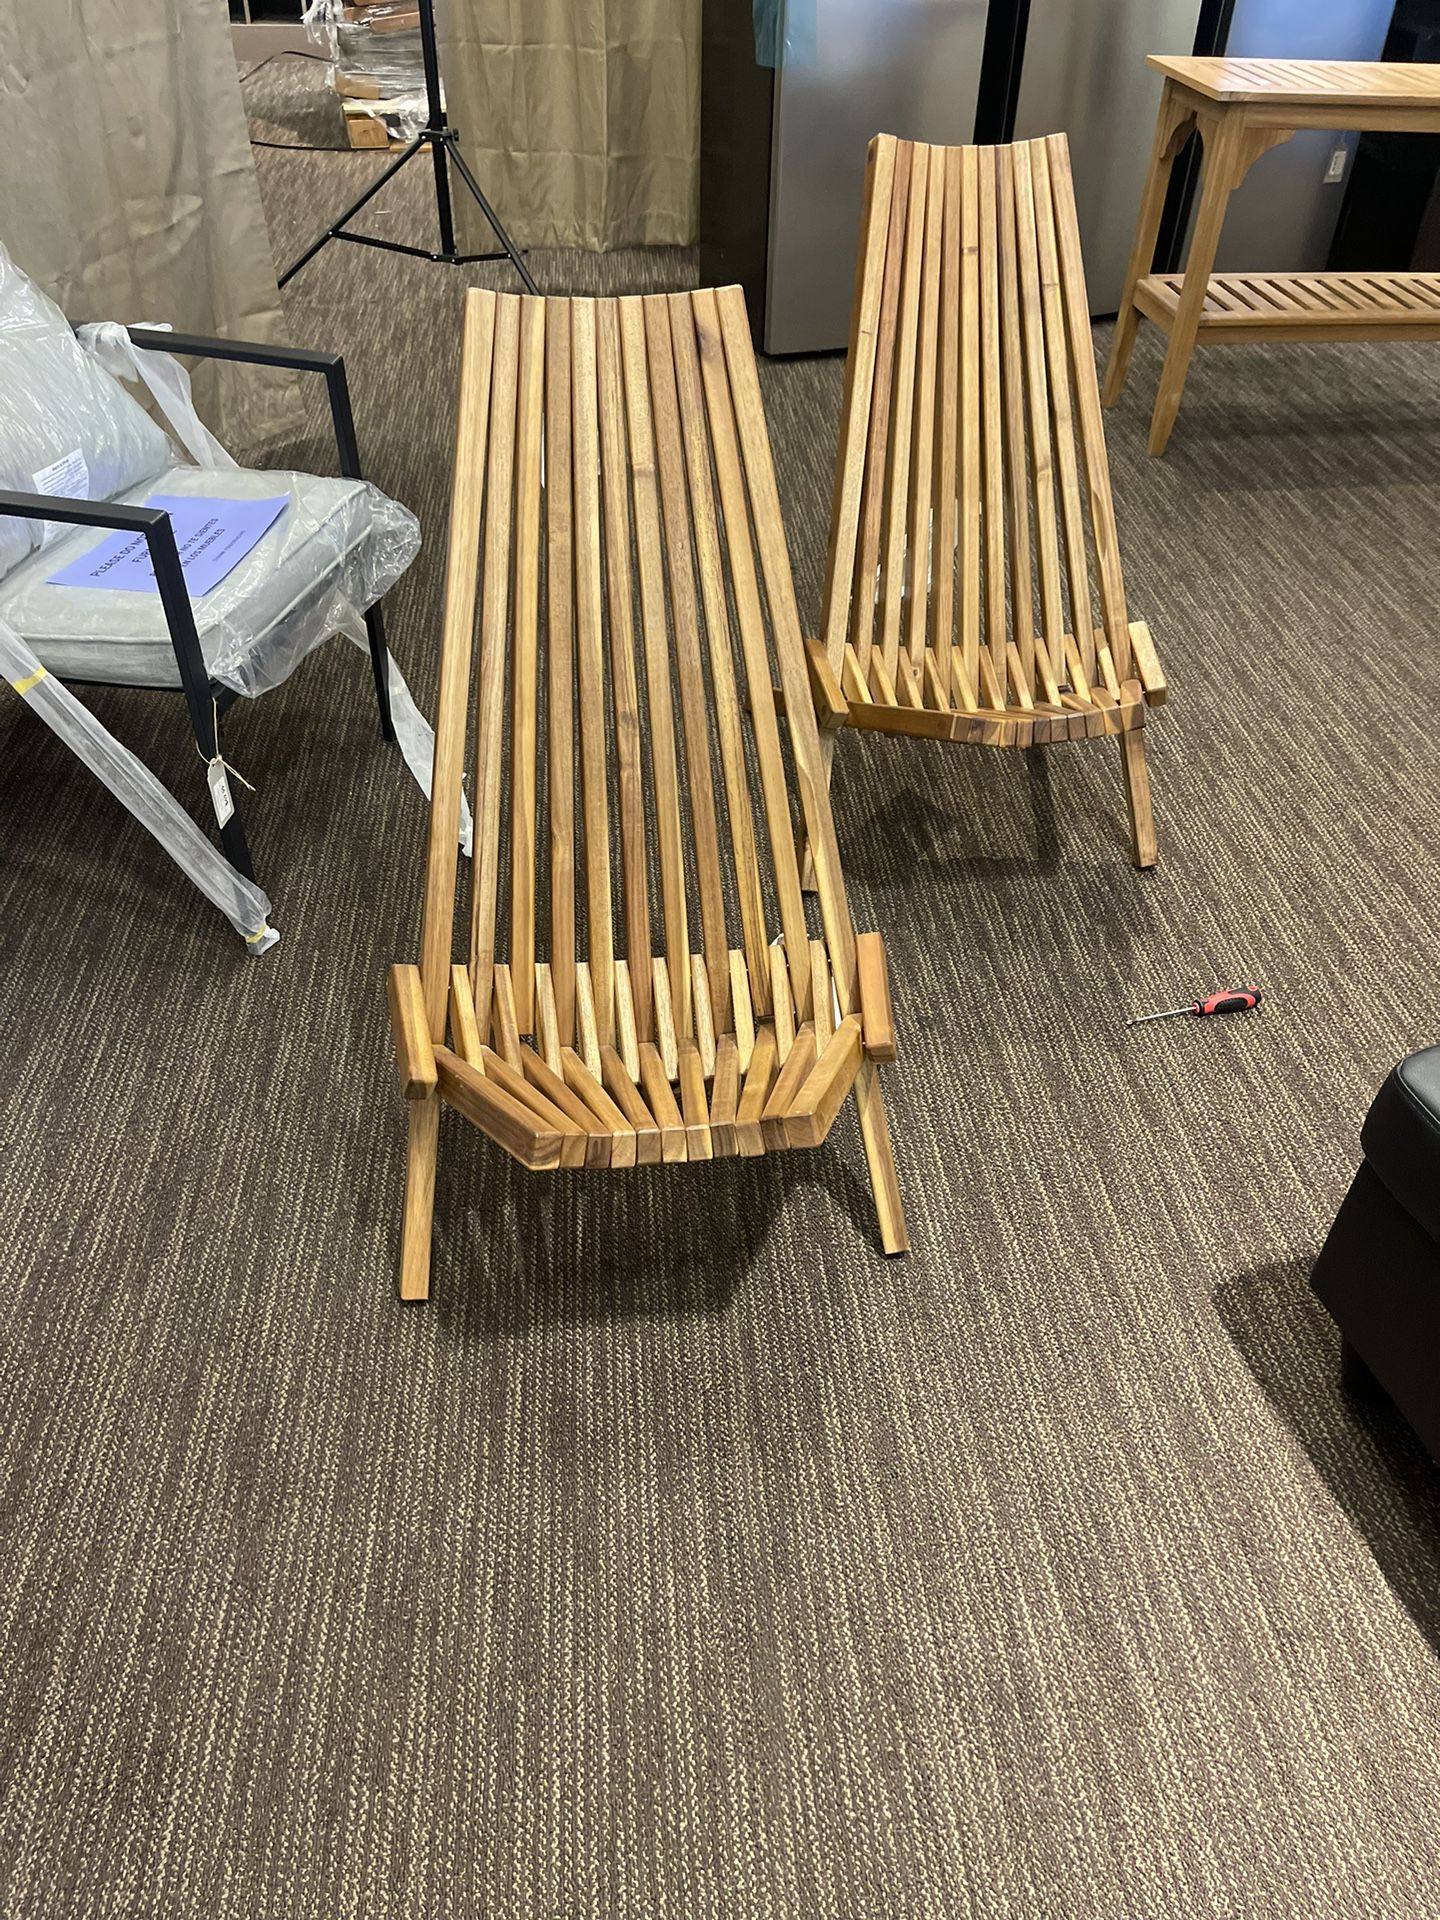 Melino Wooden Folding Chair $44.99 each